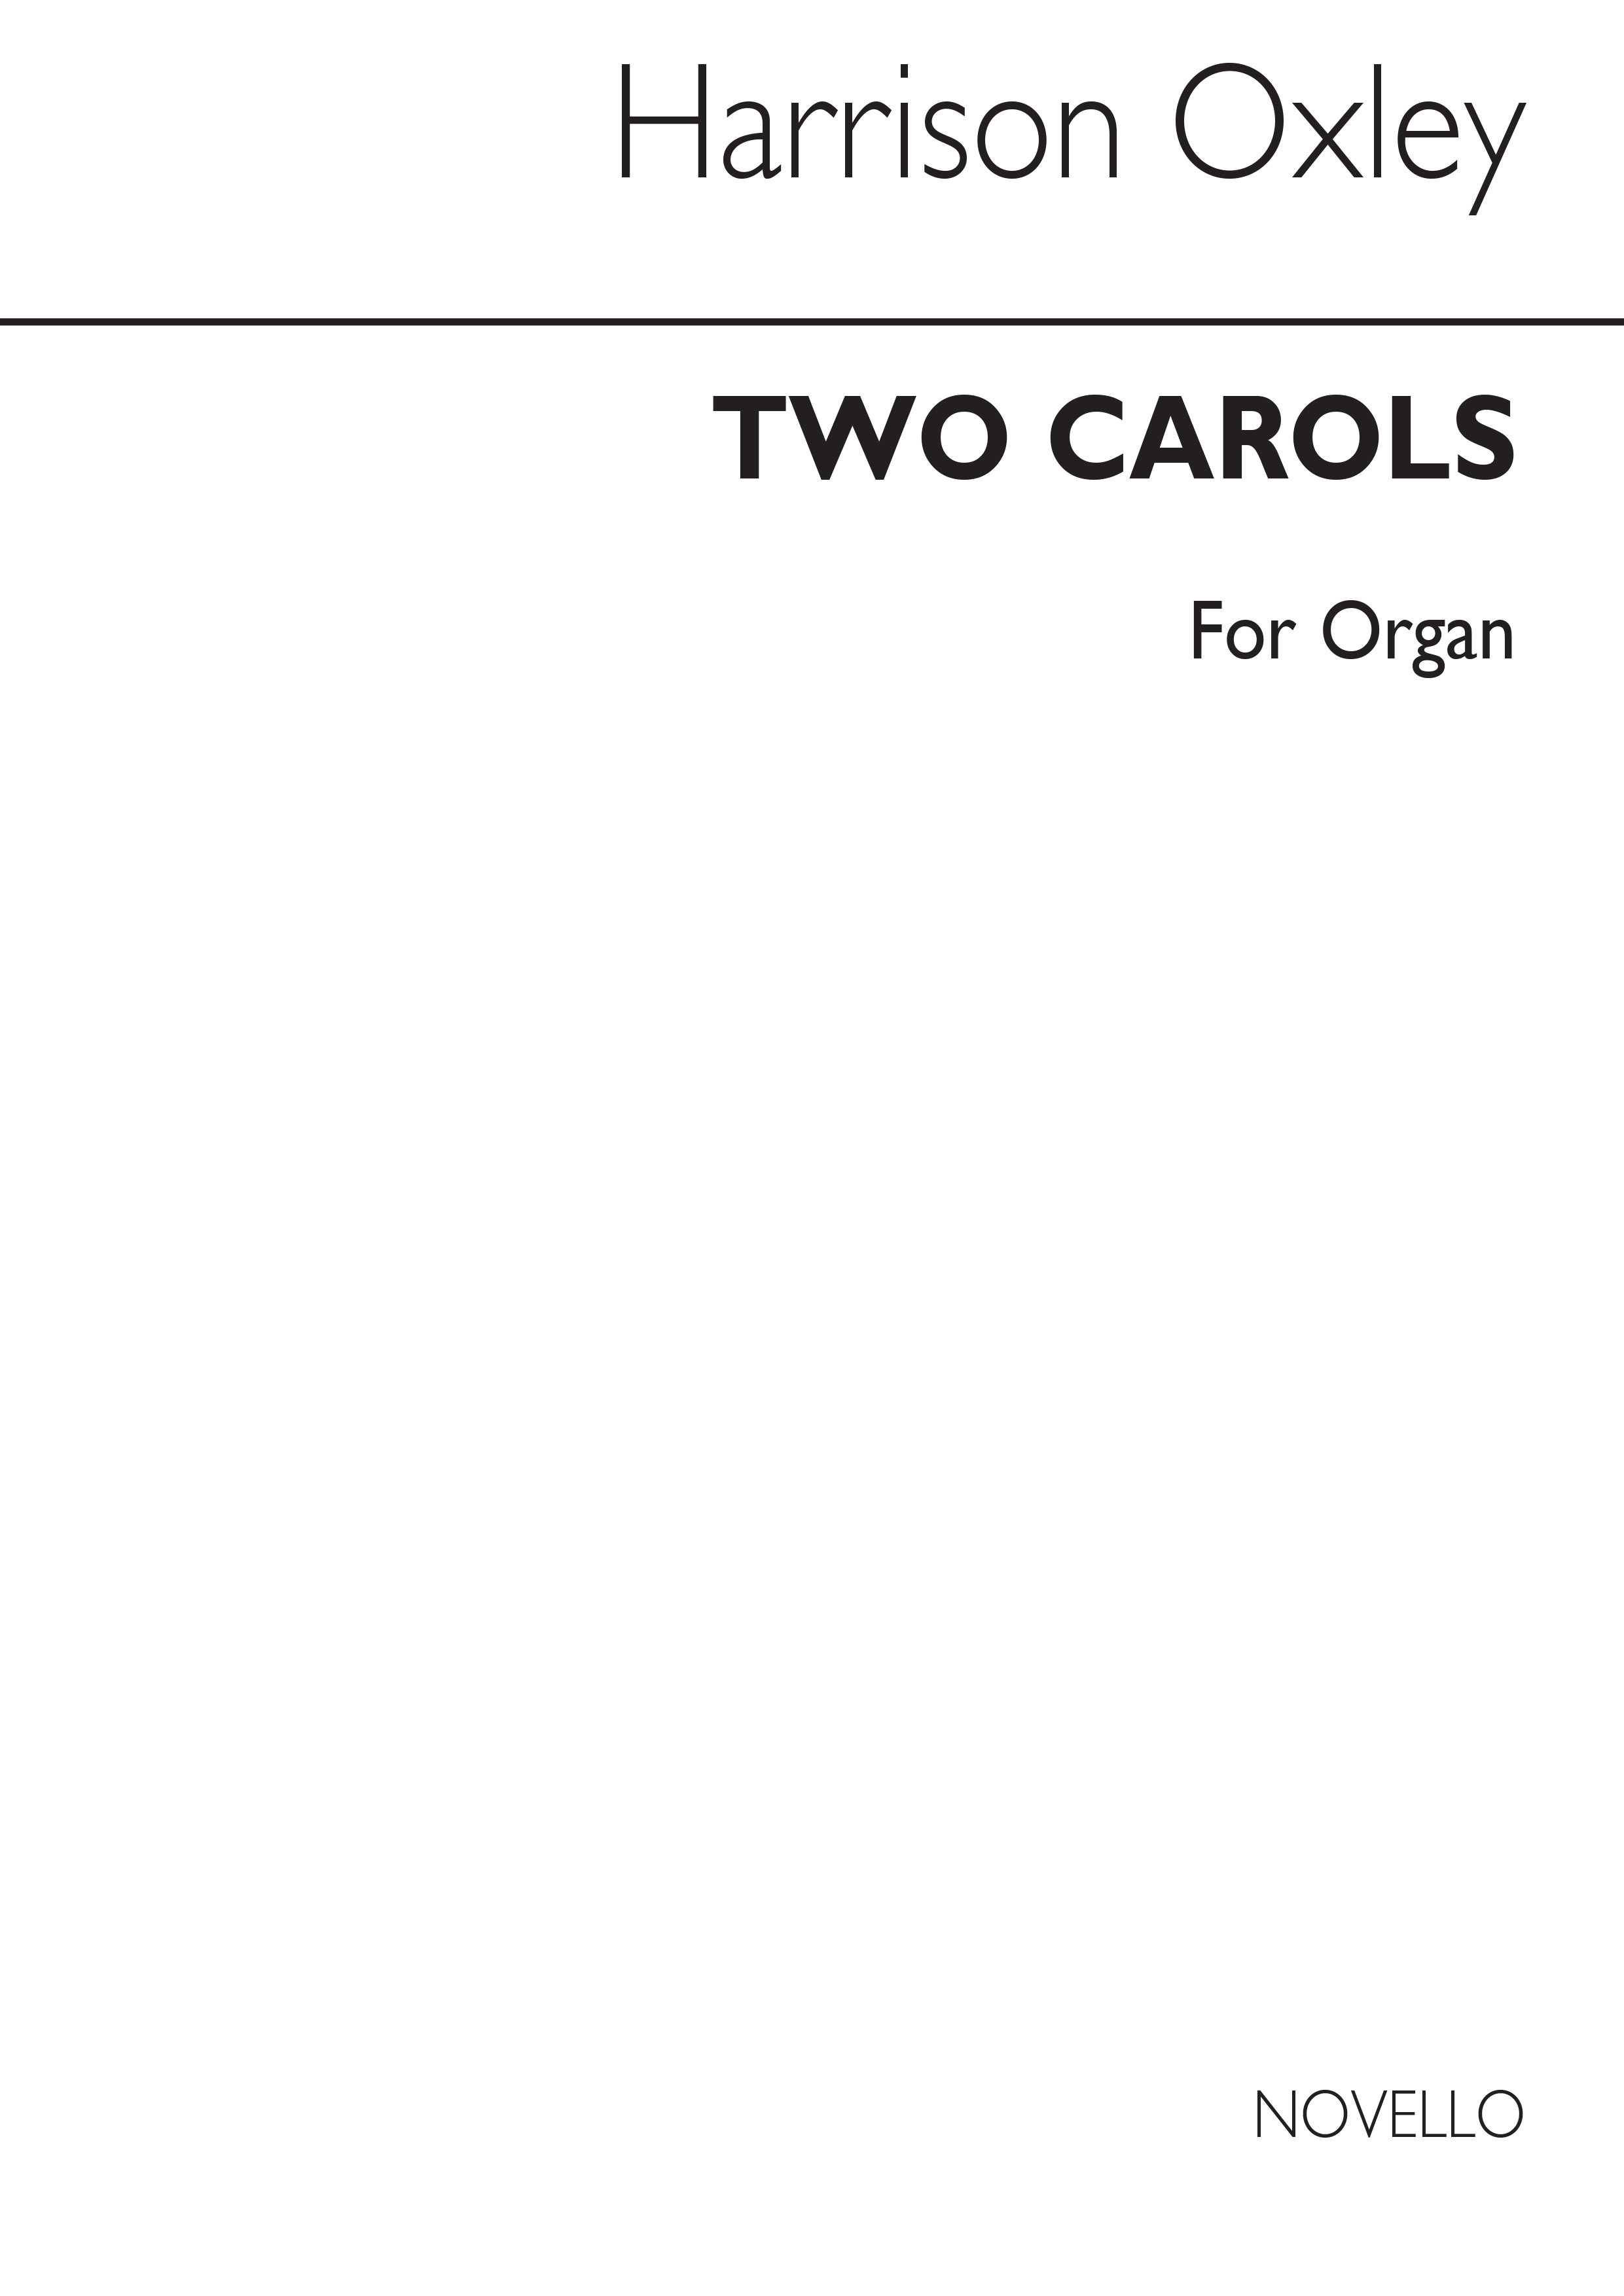 Harrison Oxley: Two Carols for Organ